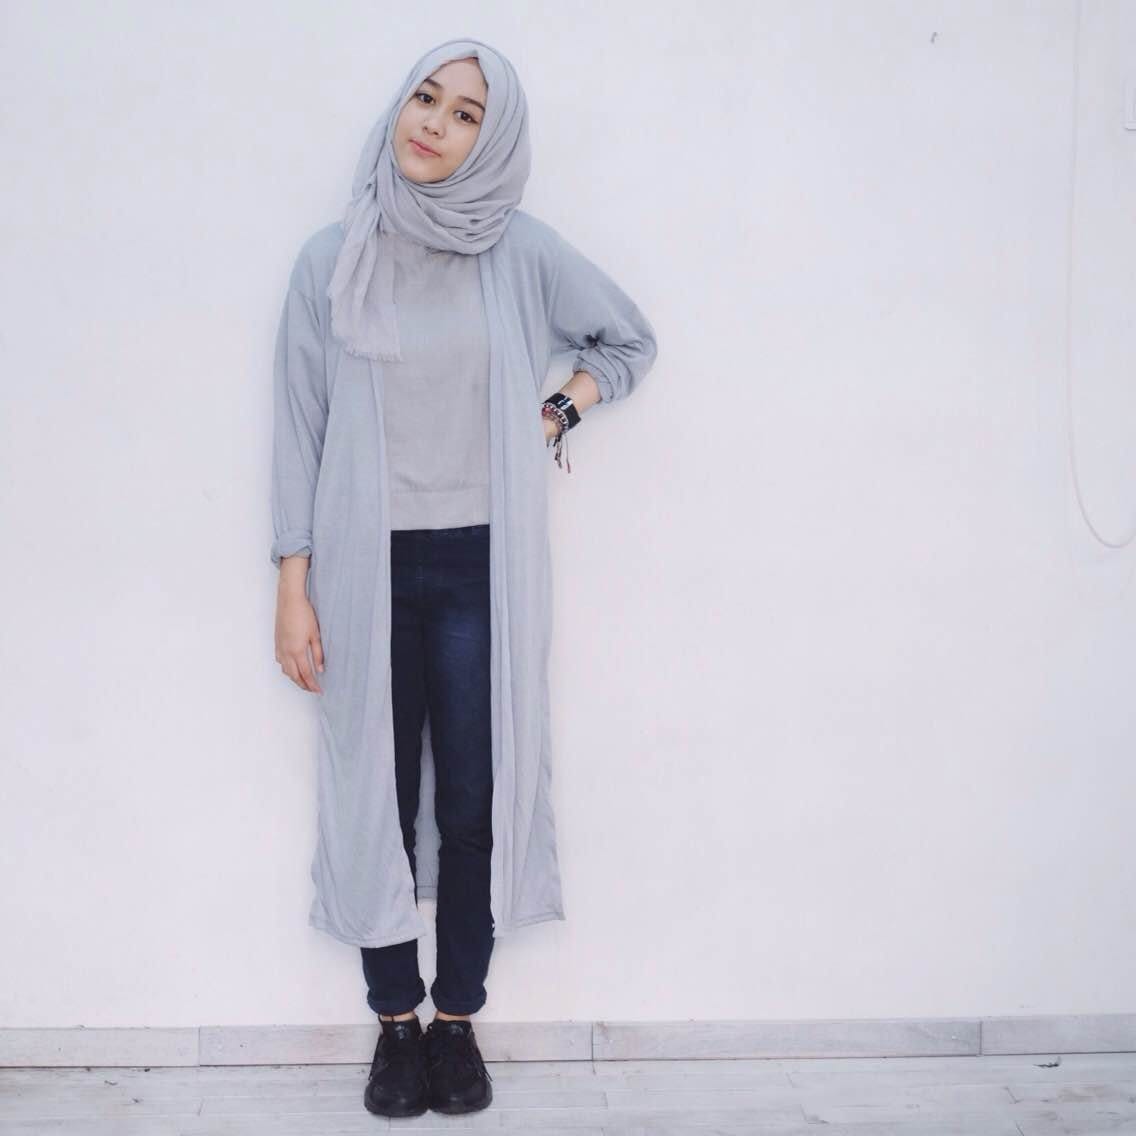 Hijab Warna Hitam Apakah Cocok Untuk Jalan Jalan Diluar